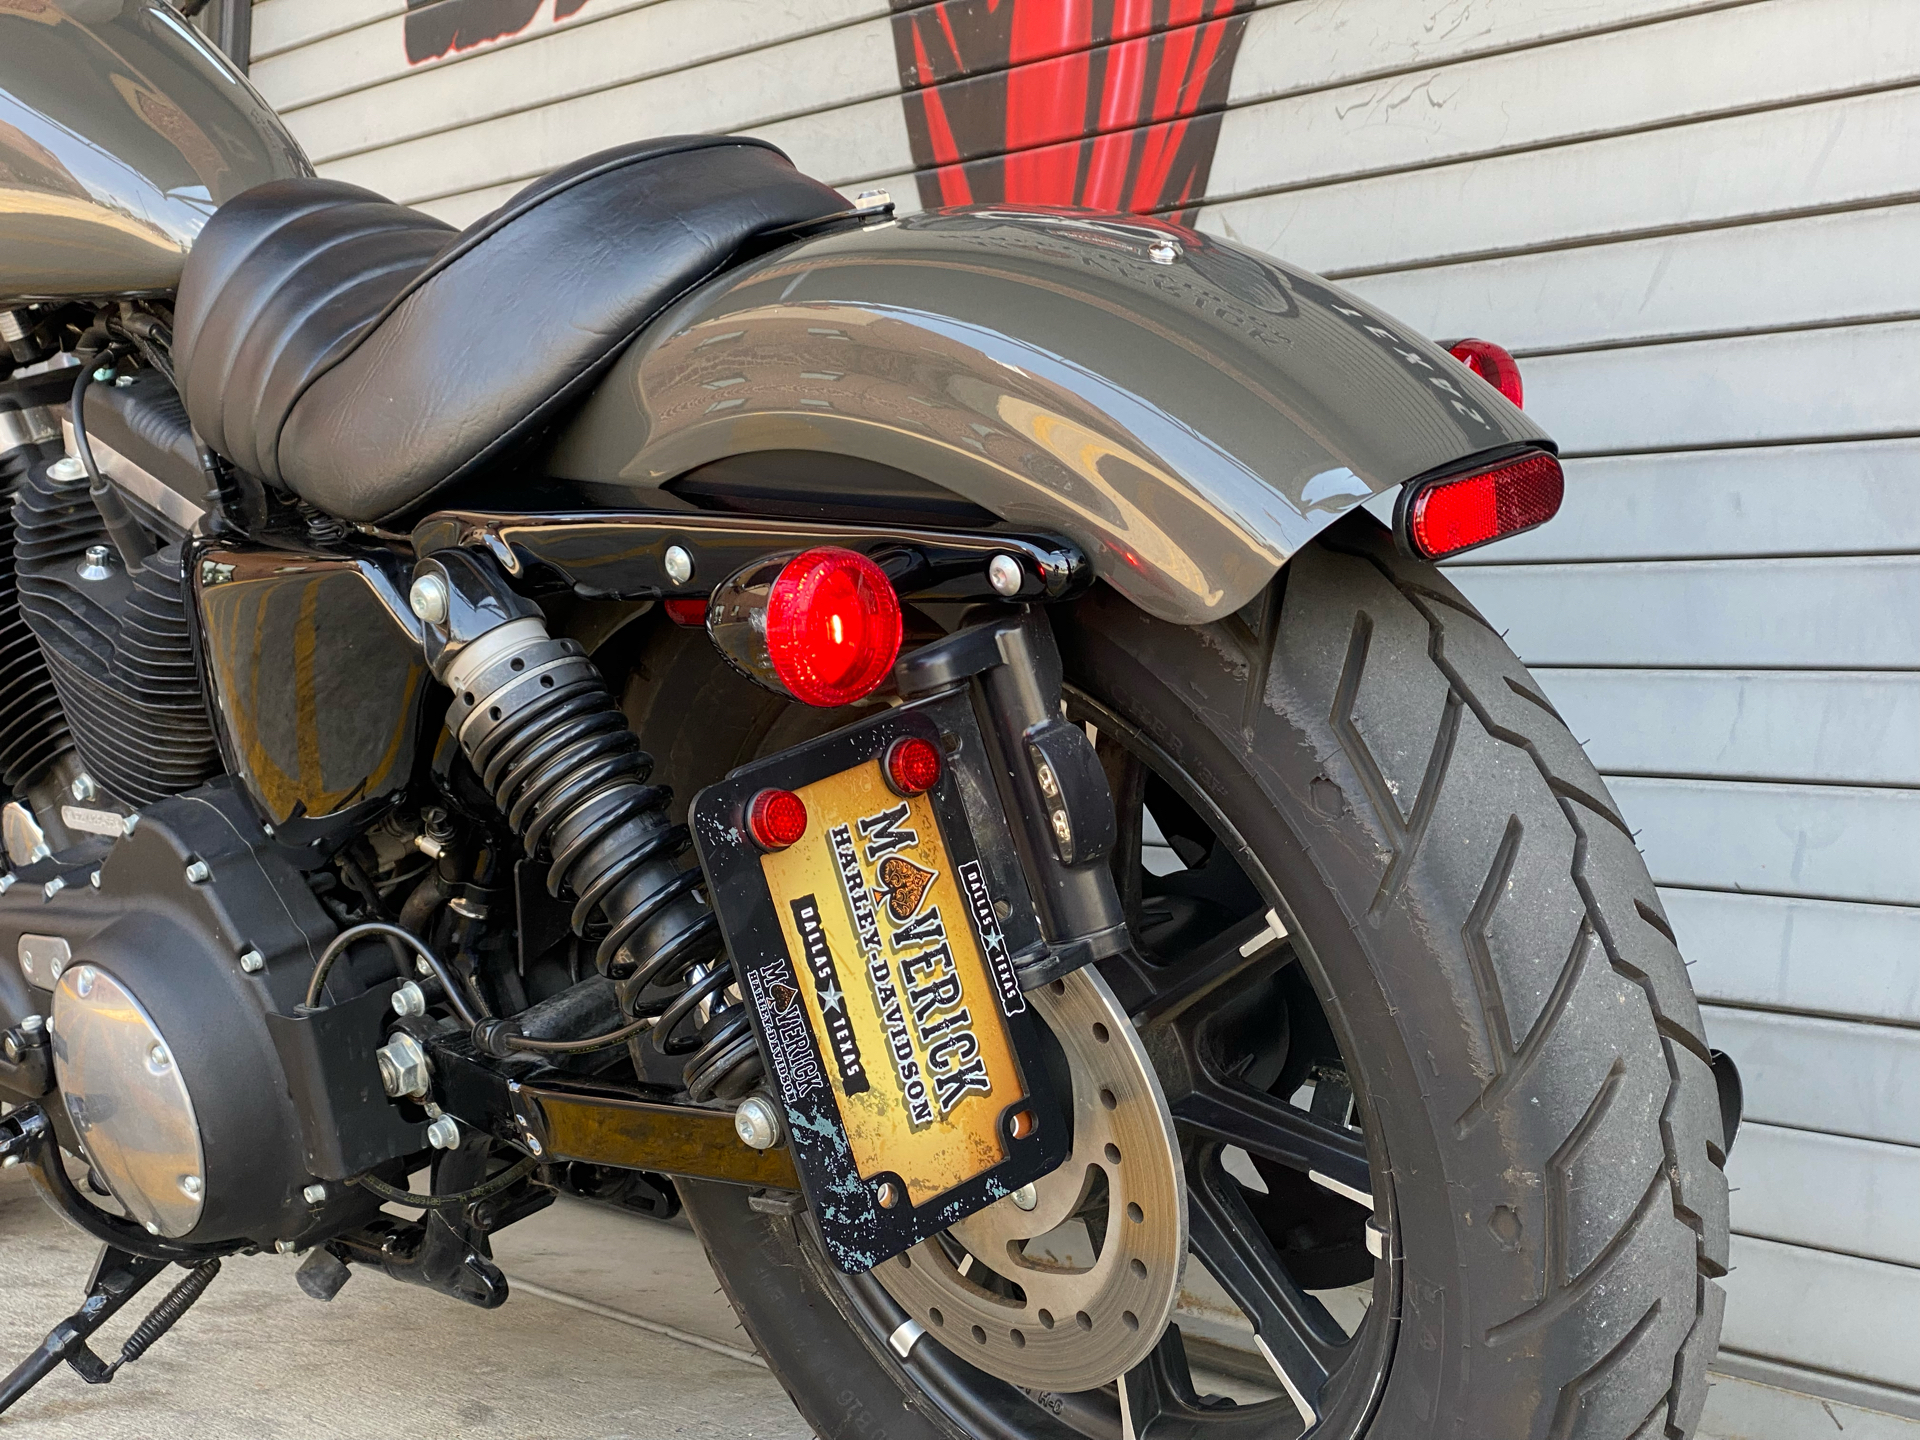 2019 Harley-Davidson Iron 883™ in Carrollton, Texas - Photo 20